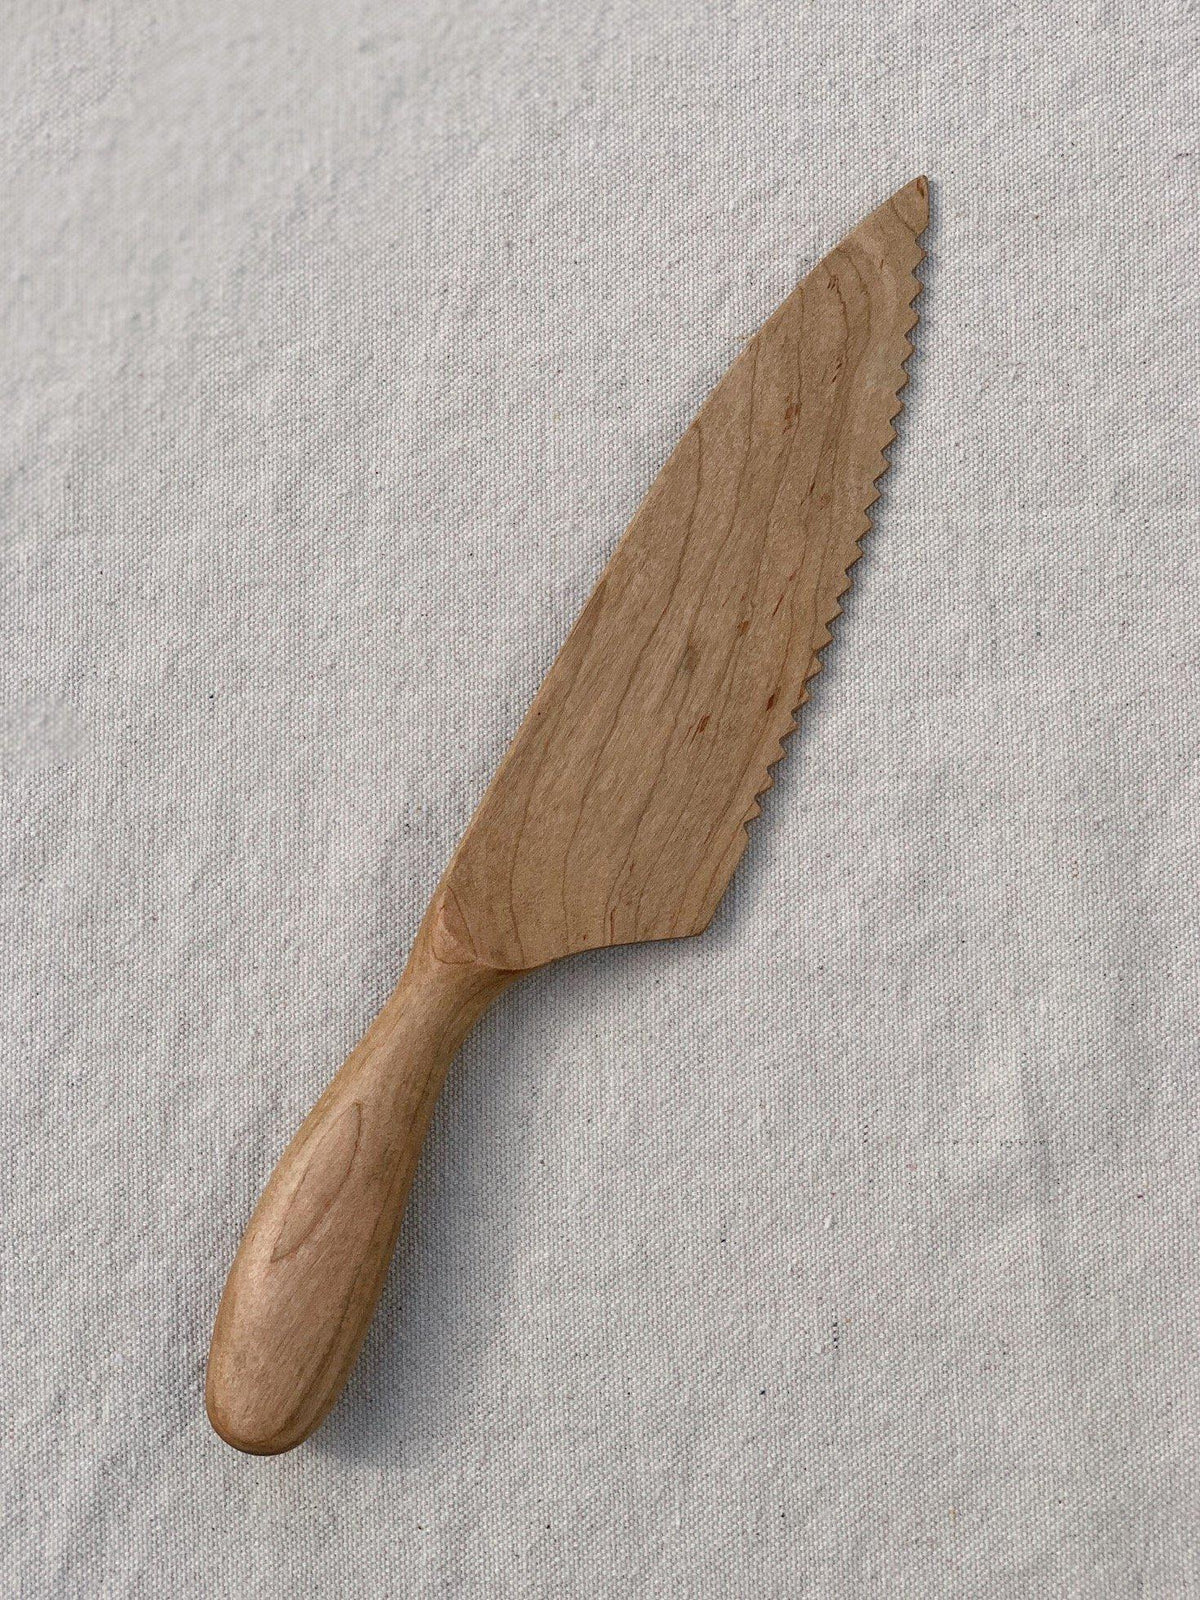 Maple Wood Cake Knife by Four Leaf Wood Shop